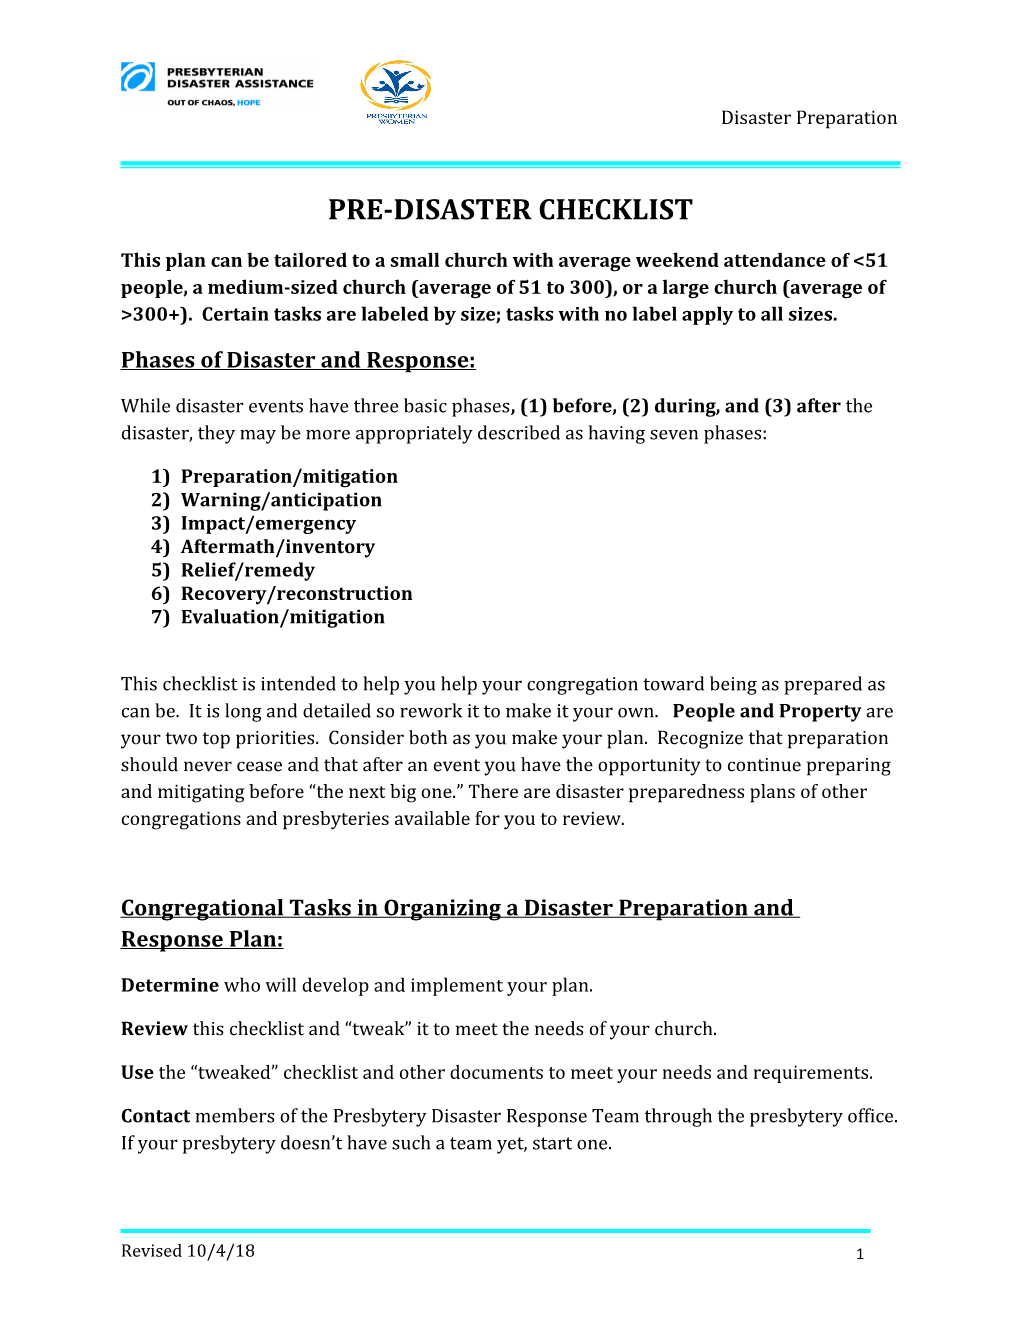 Pre-Disaster Checklist